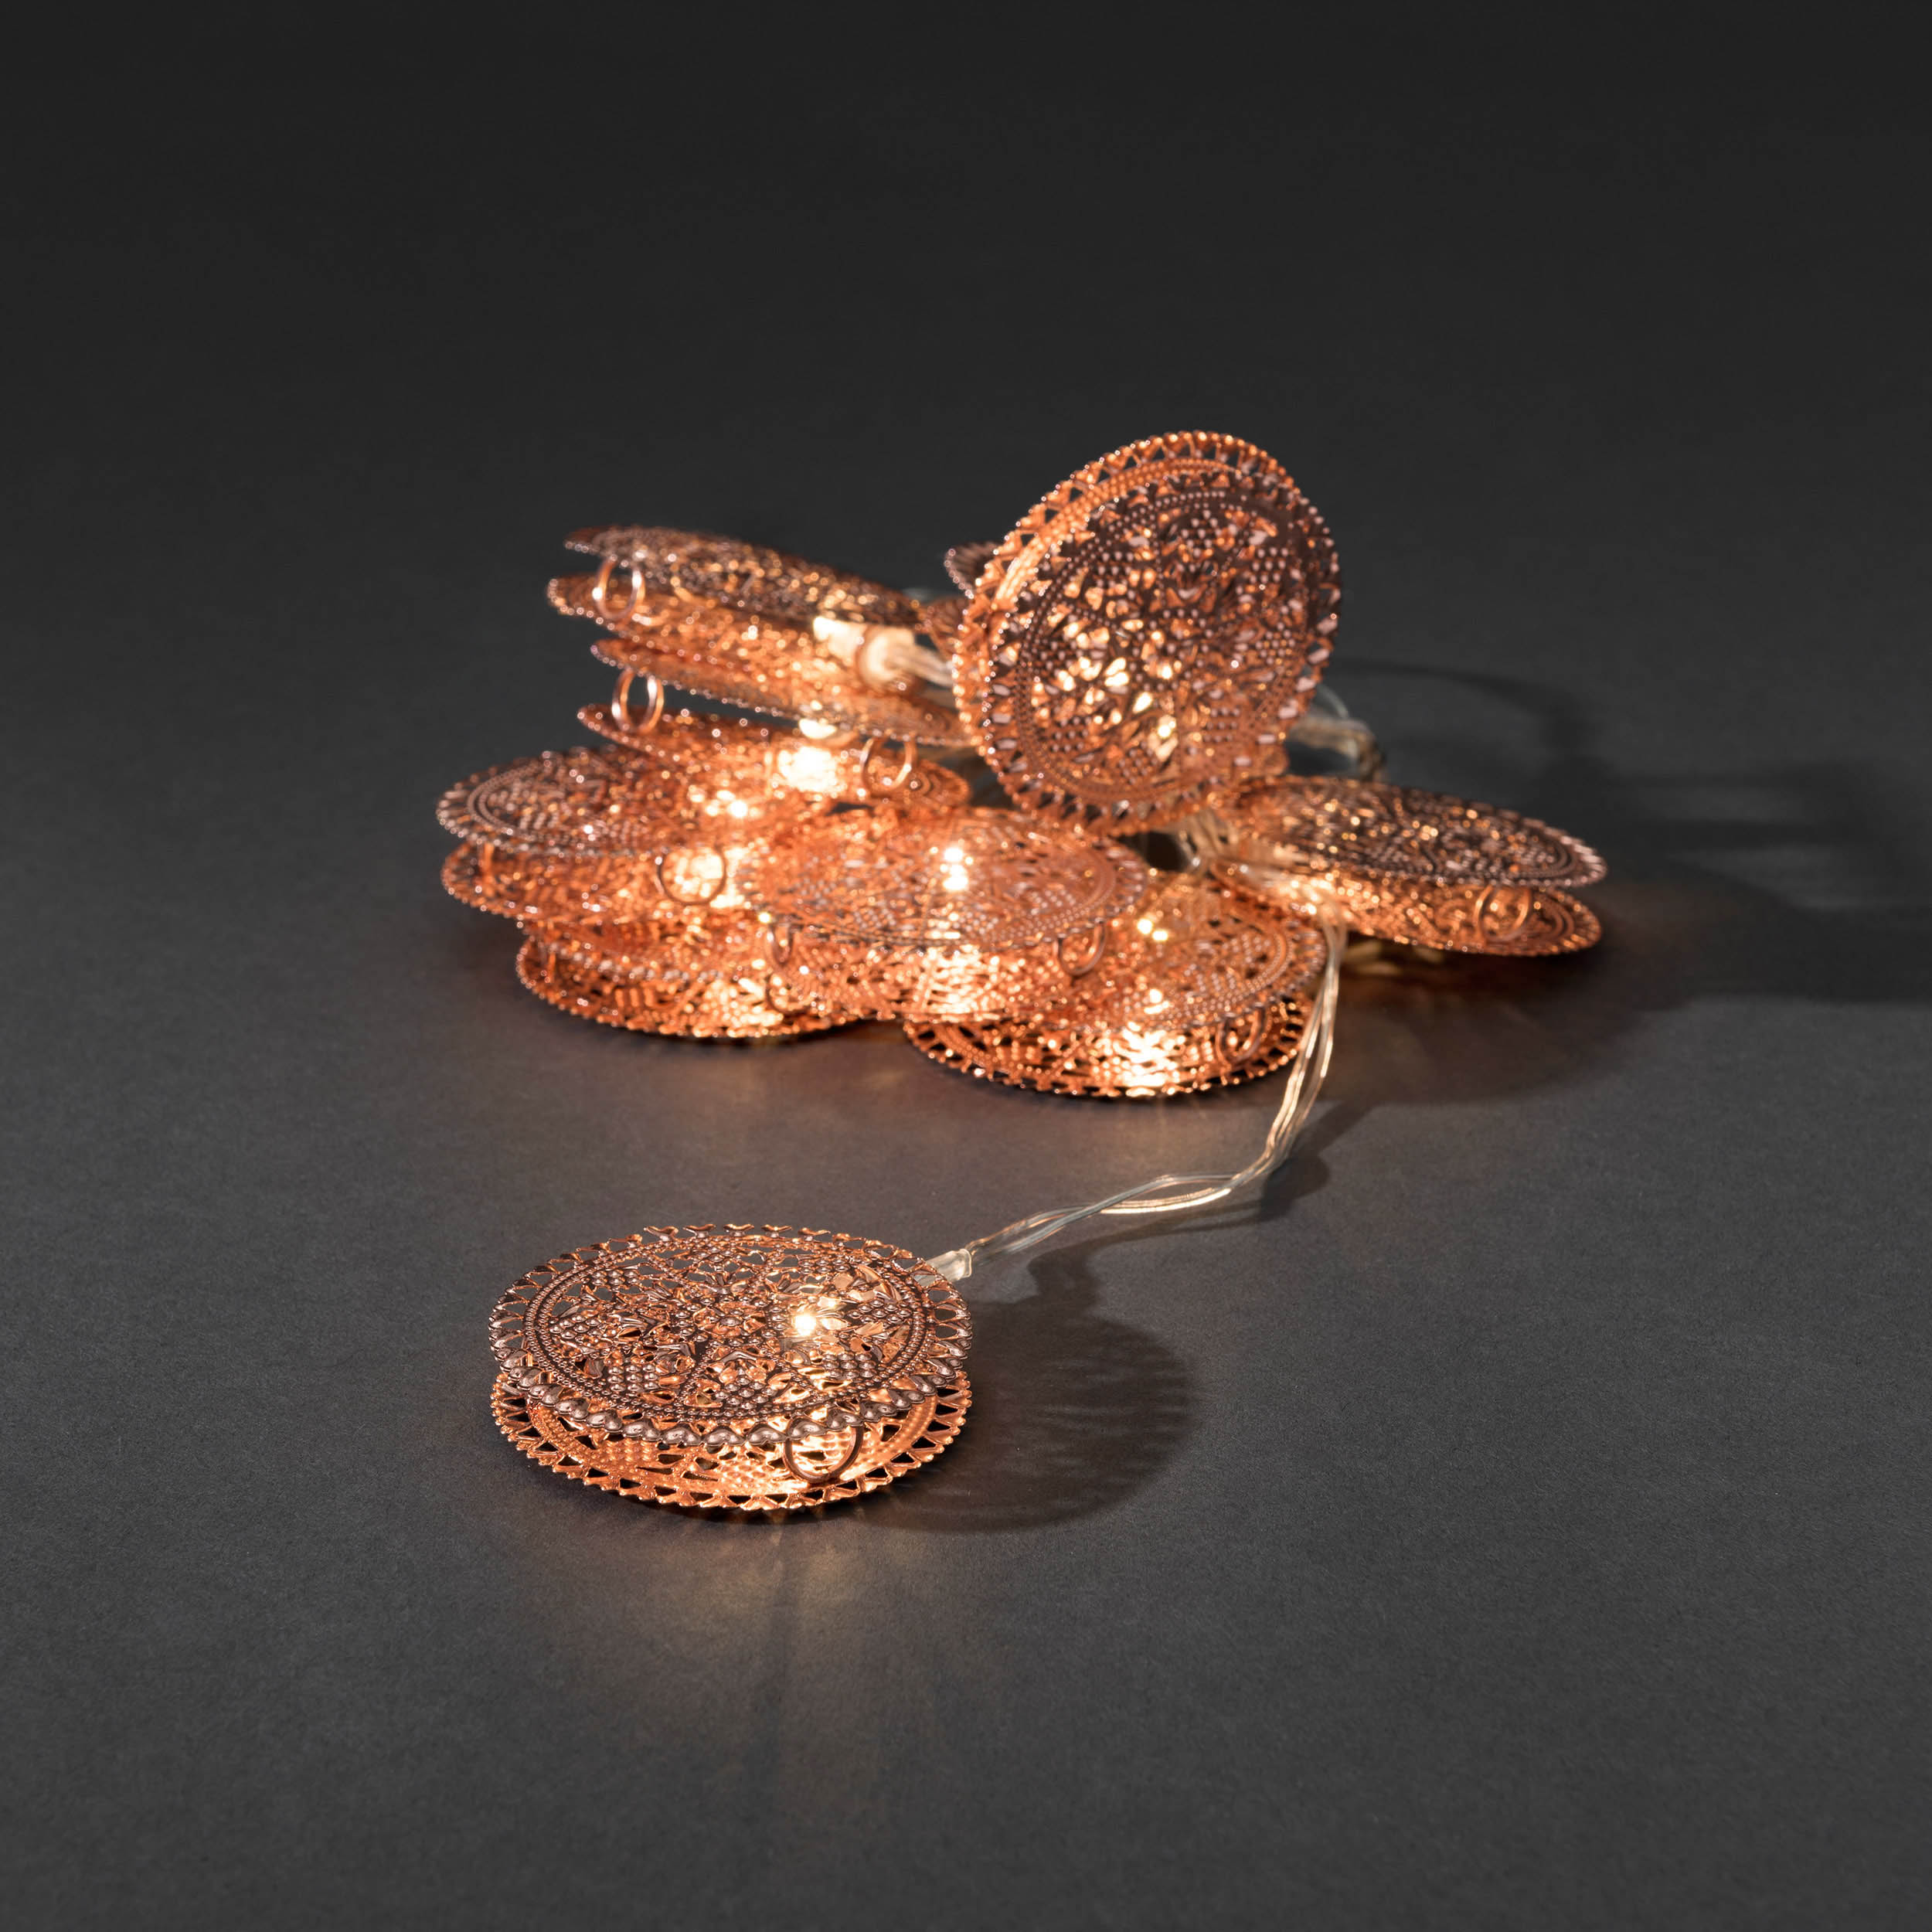 Decorative LED light set copper-coloured metal coins